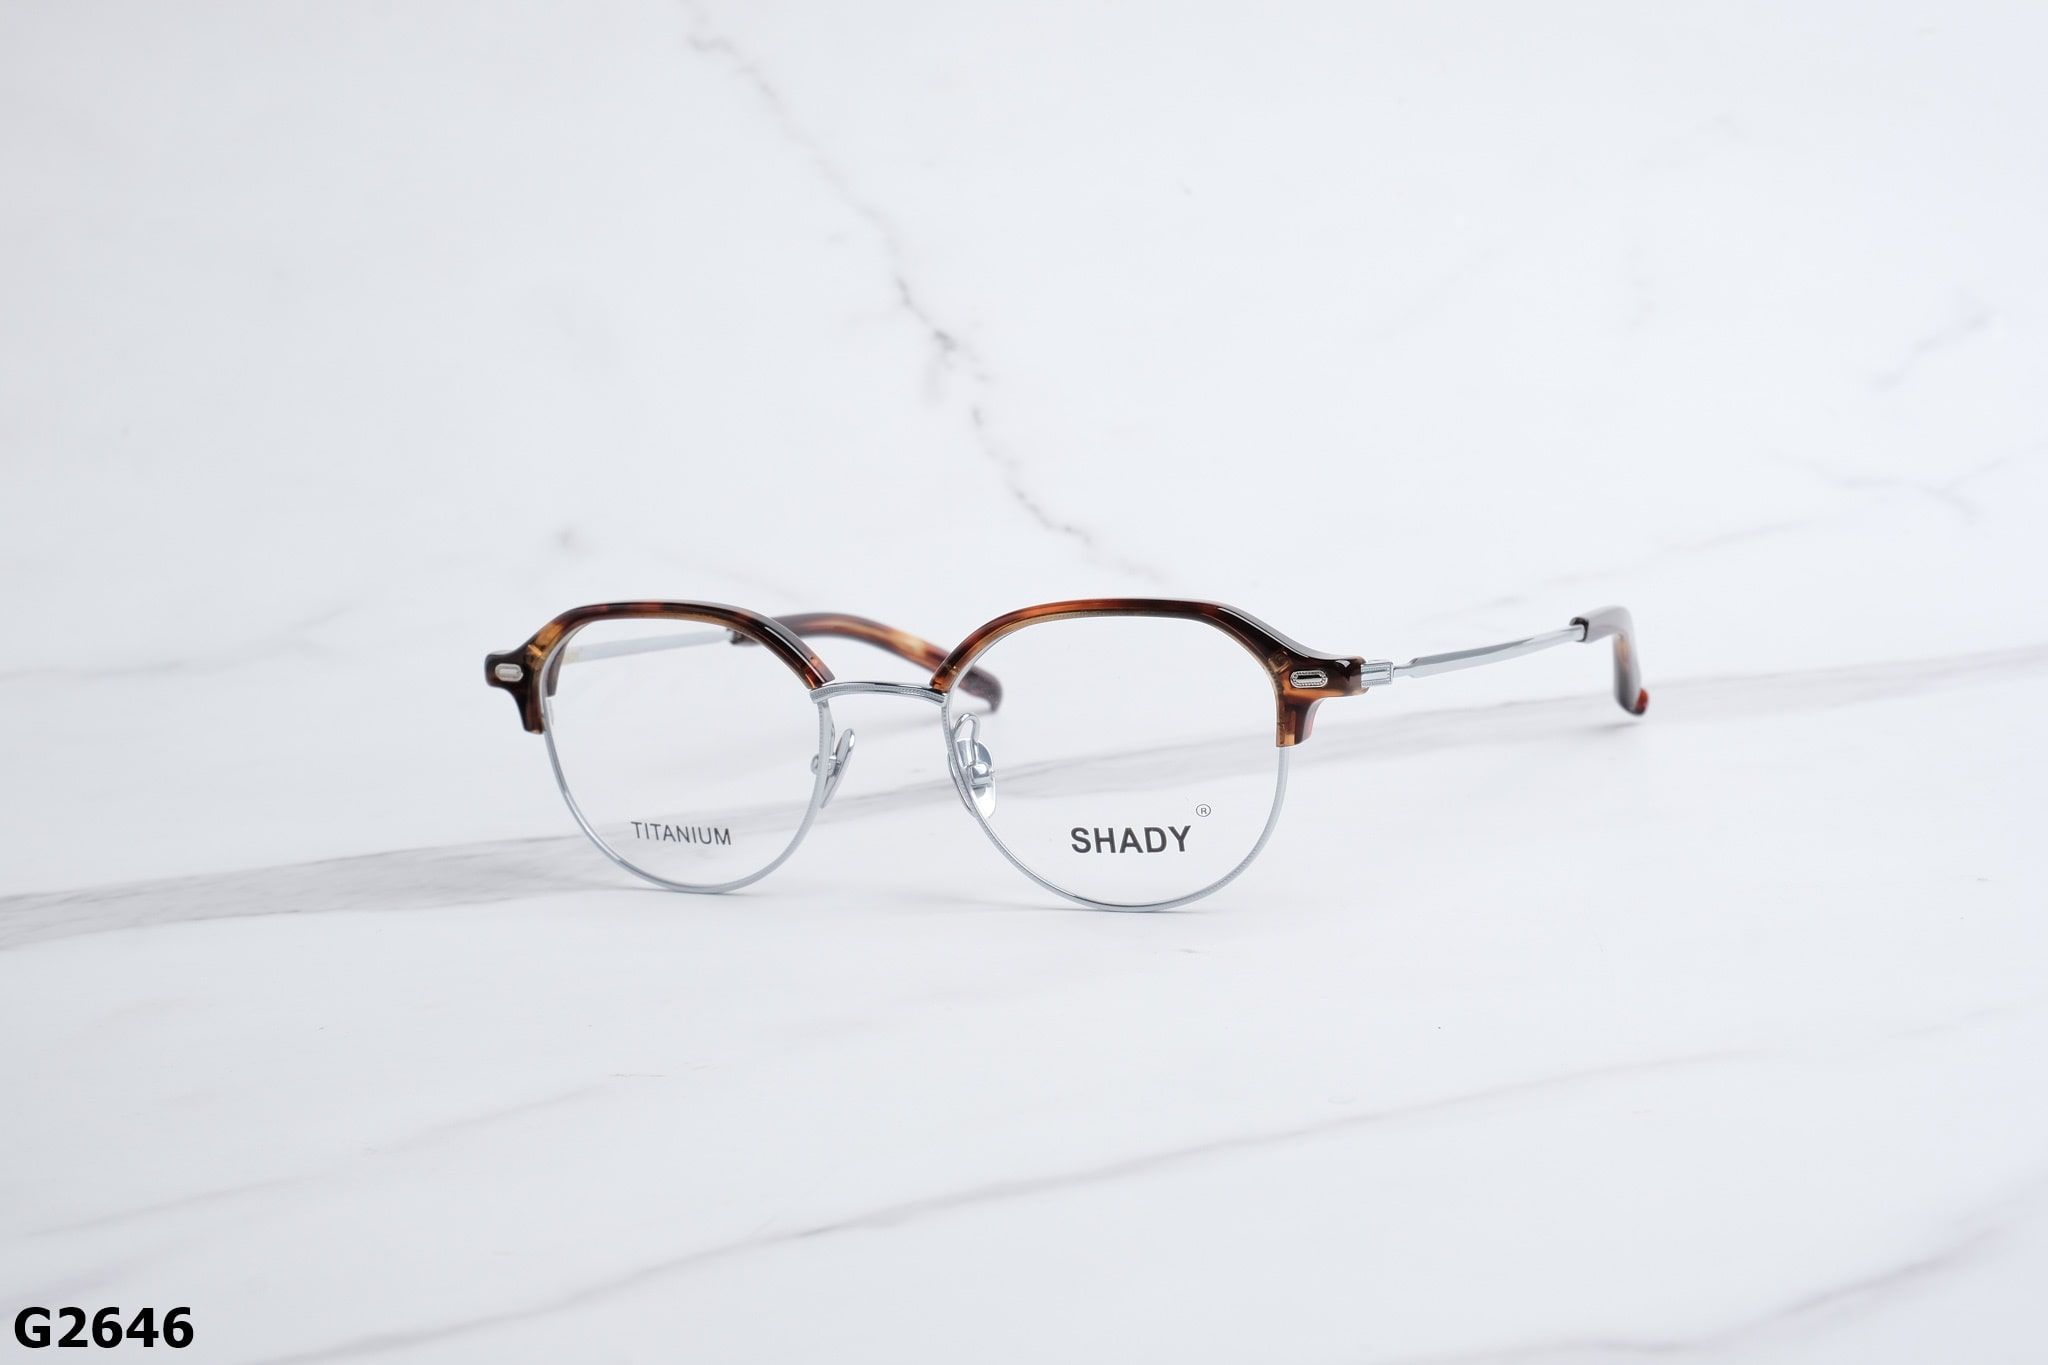  SHADY Eyewear - Glasses - G2646 